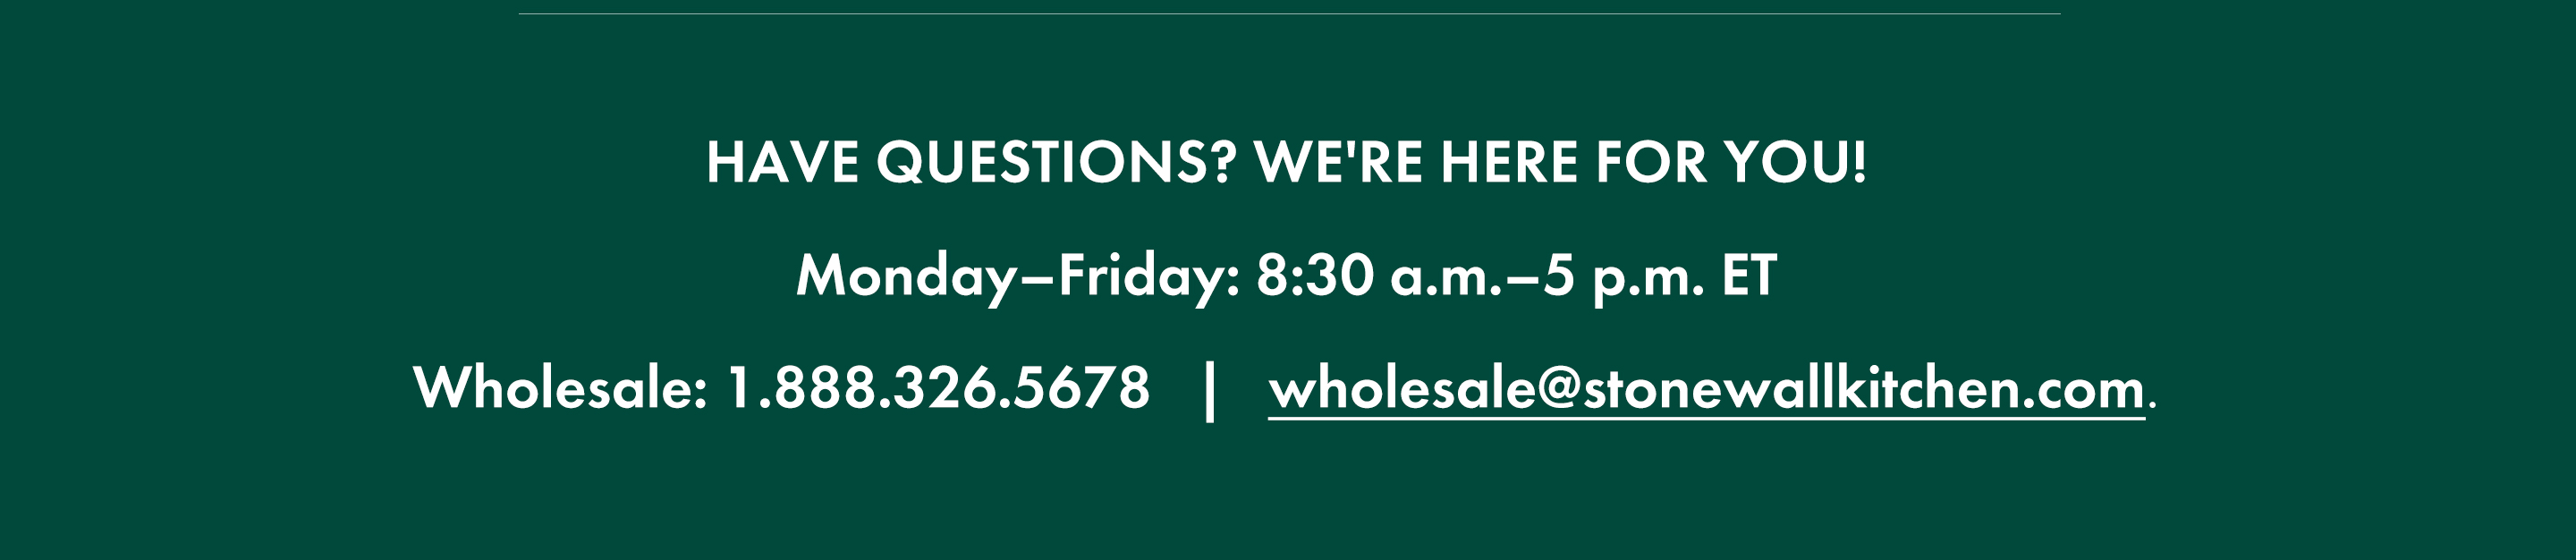 Have questions? We're here for you! Monday-Friday: 8:30 a.m.-5 p.m. ET; Wholesale: 1.888.326.5678; wholesale@stonewallkitchen.com